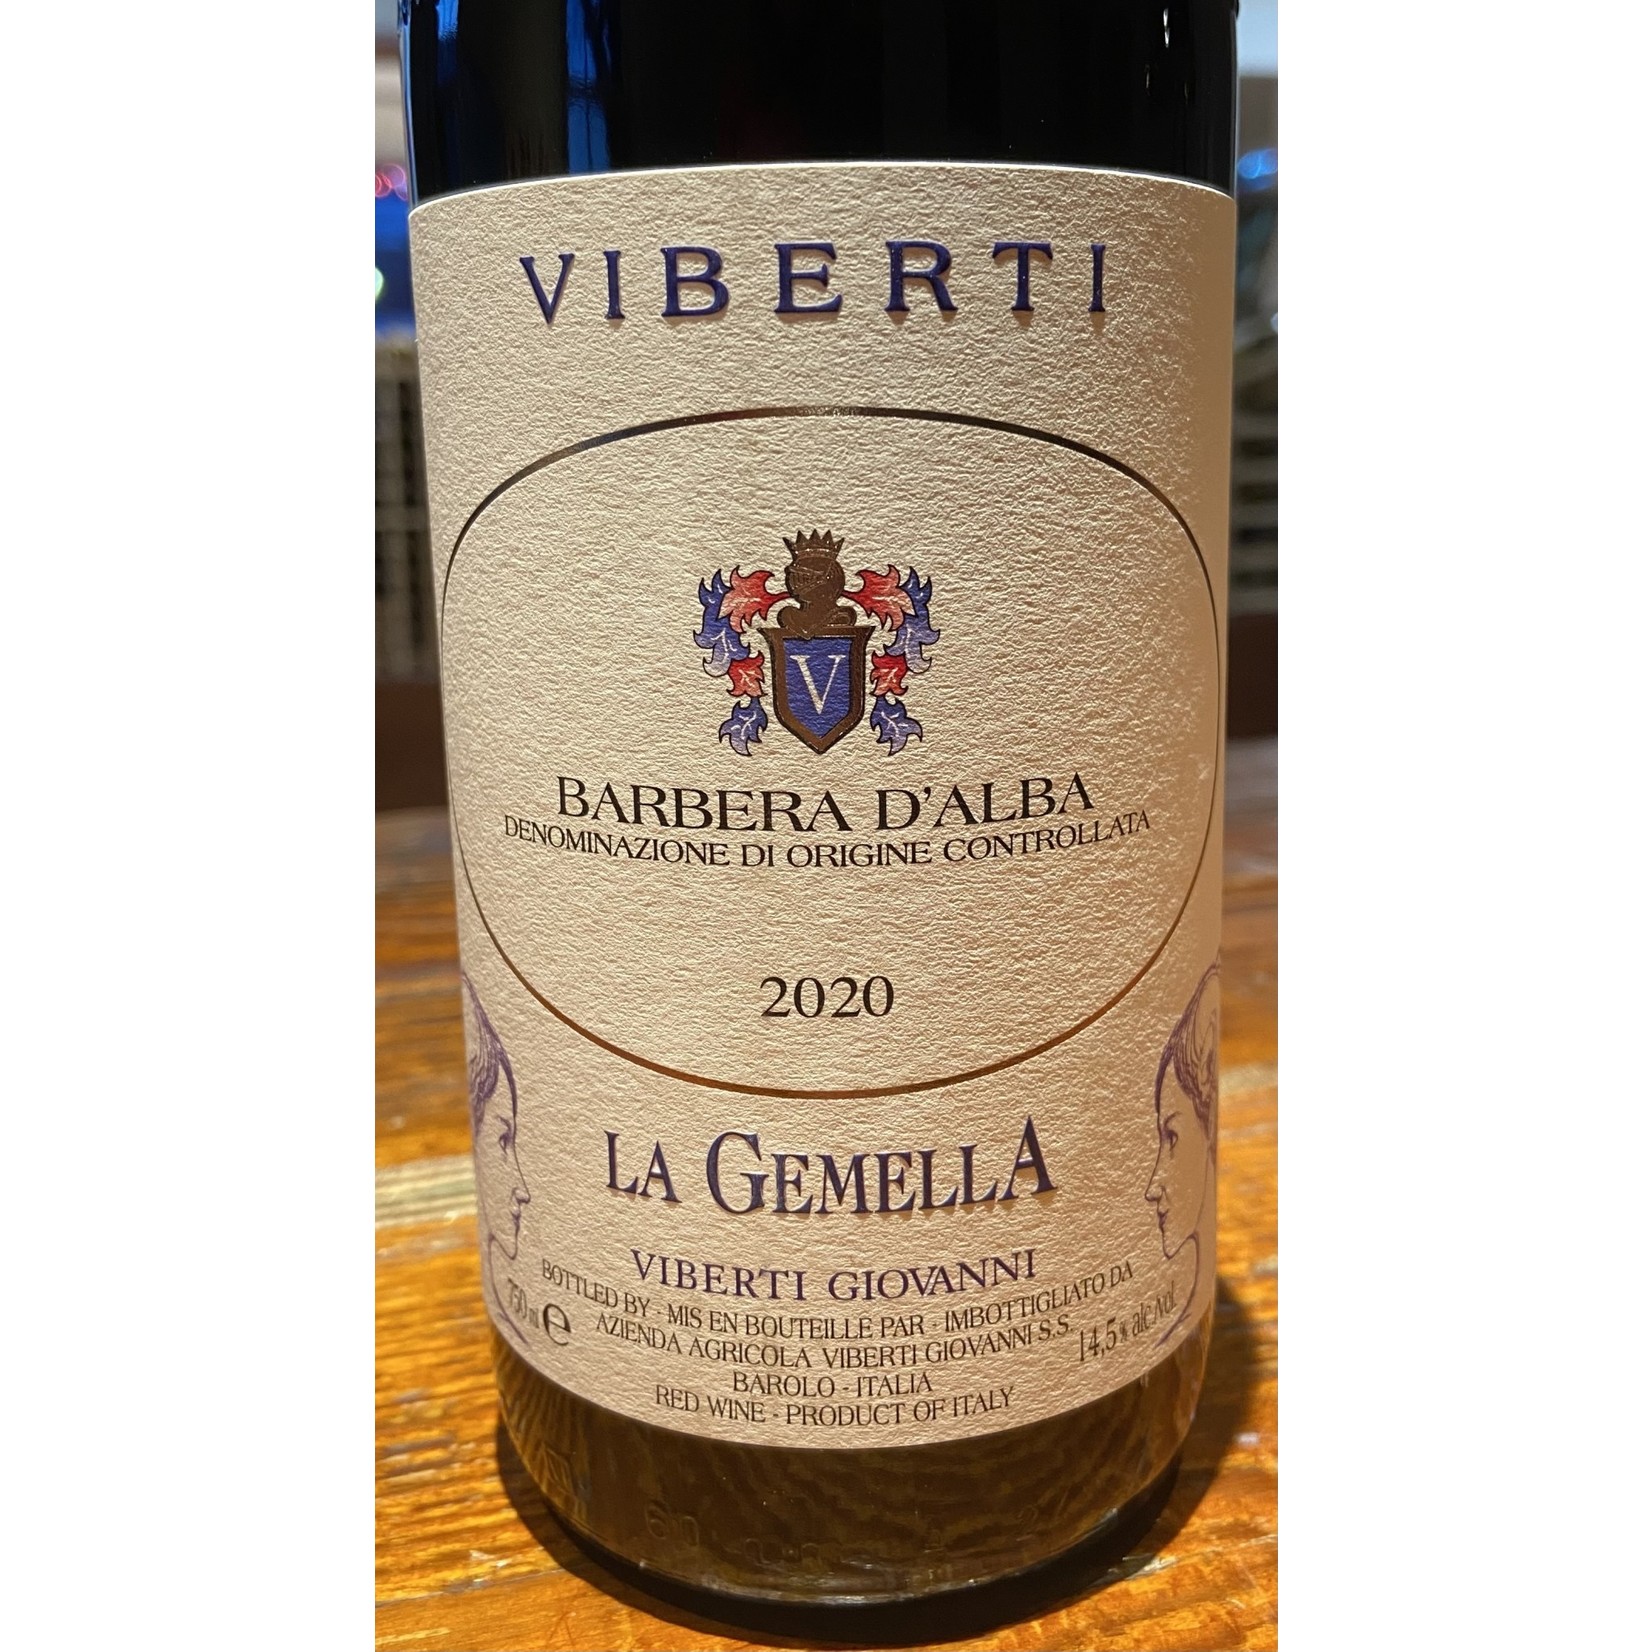 Viberti Barbera d'Alba “La Gemella”  Piedmont, Italy 2020